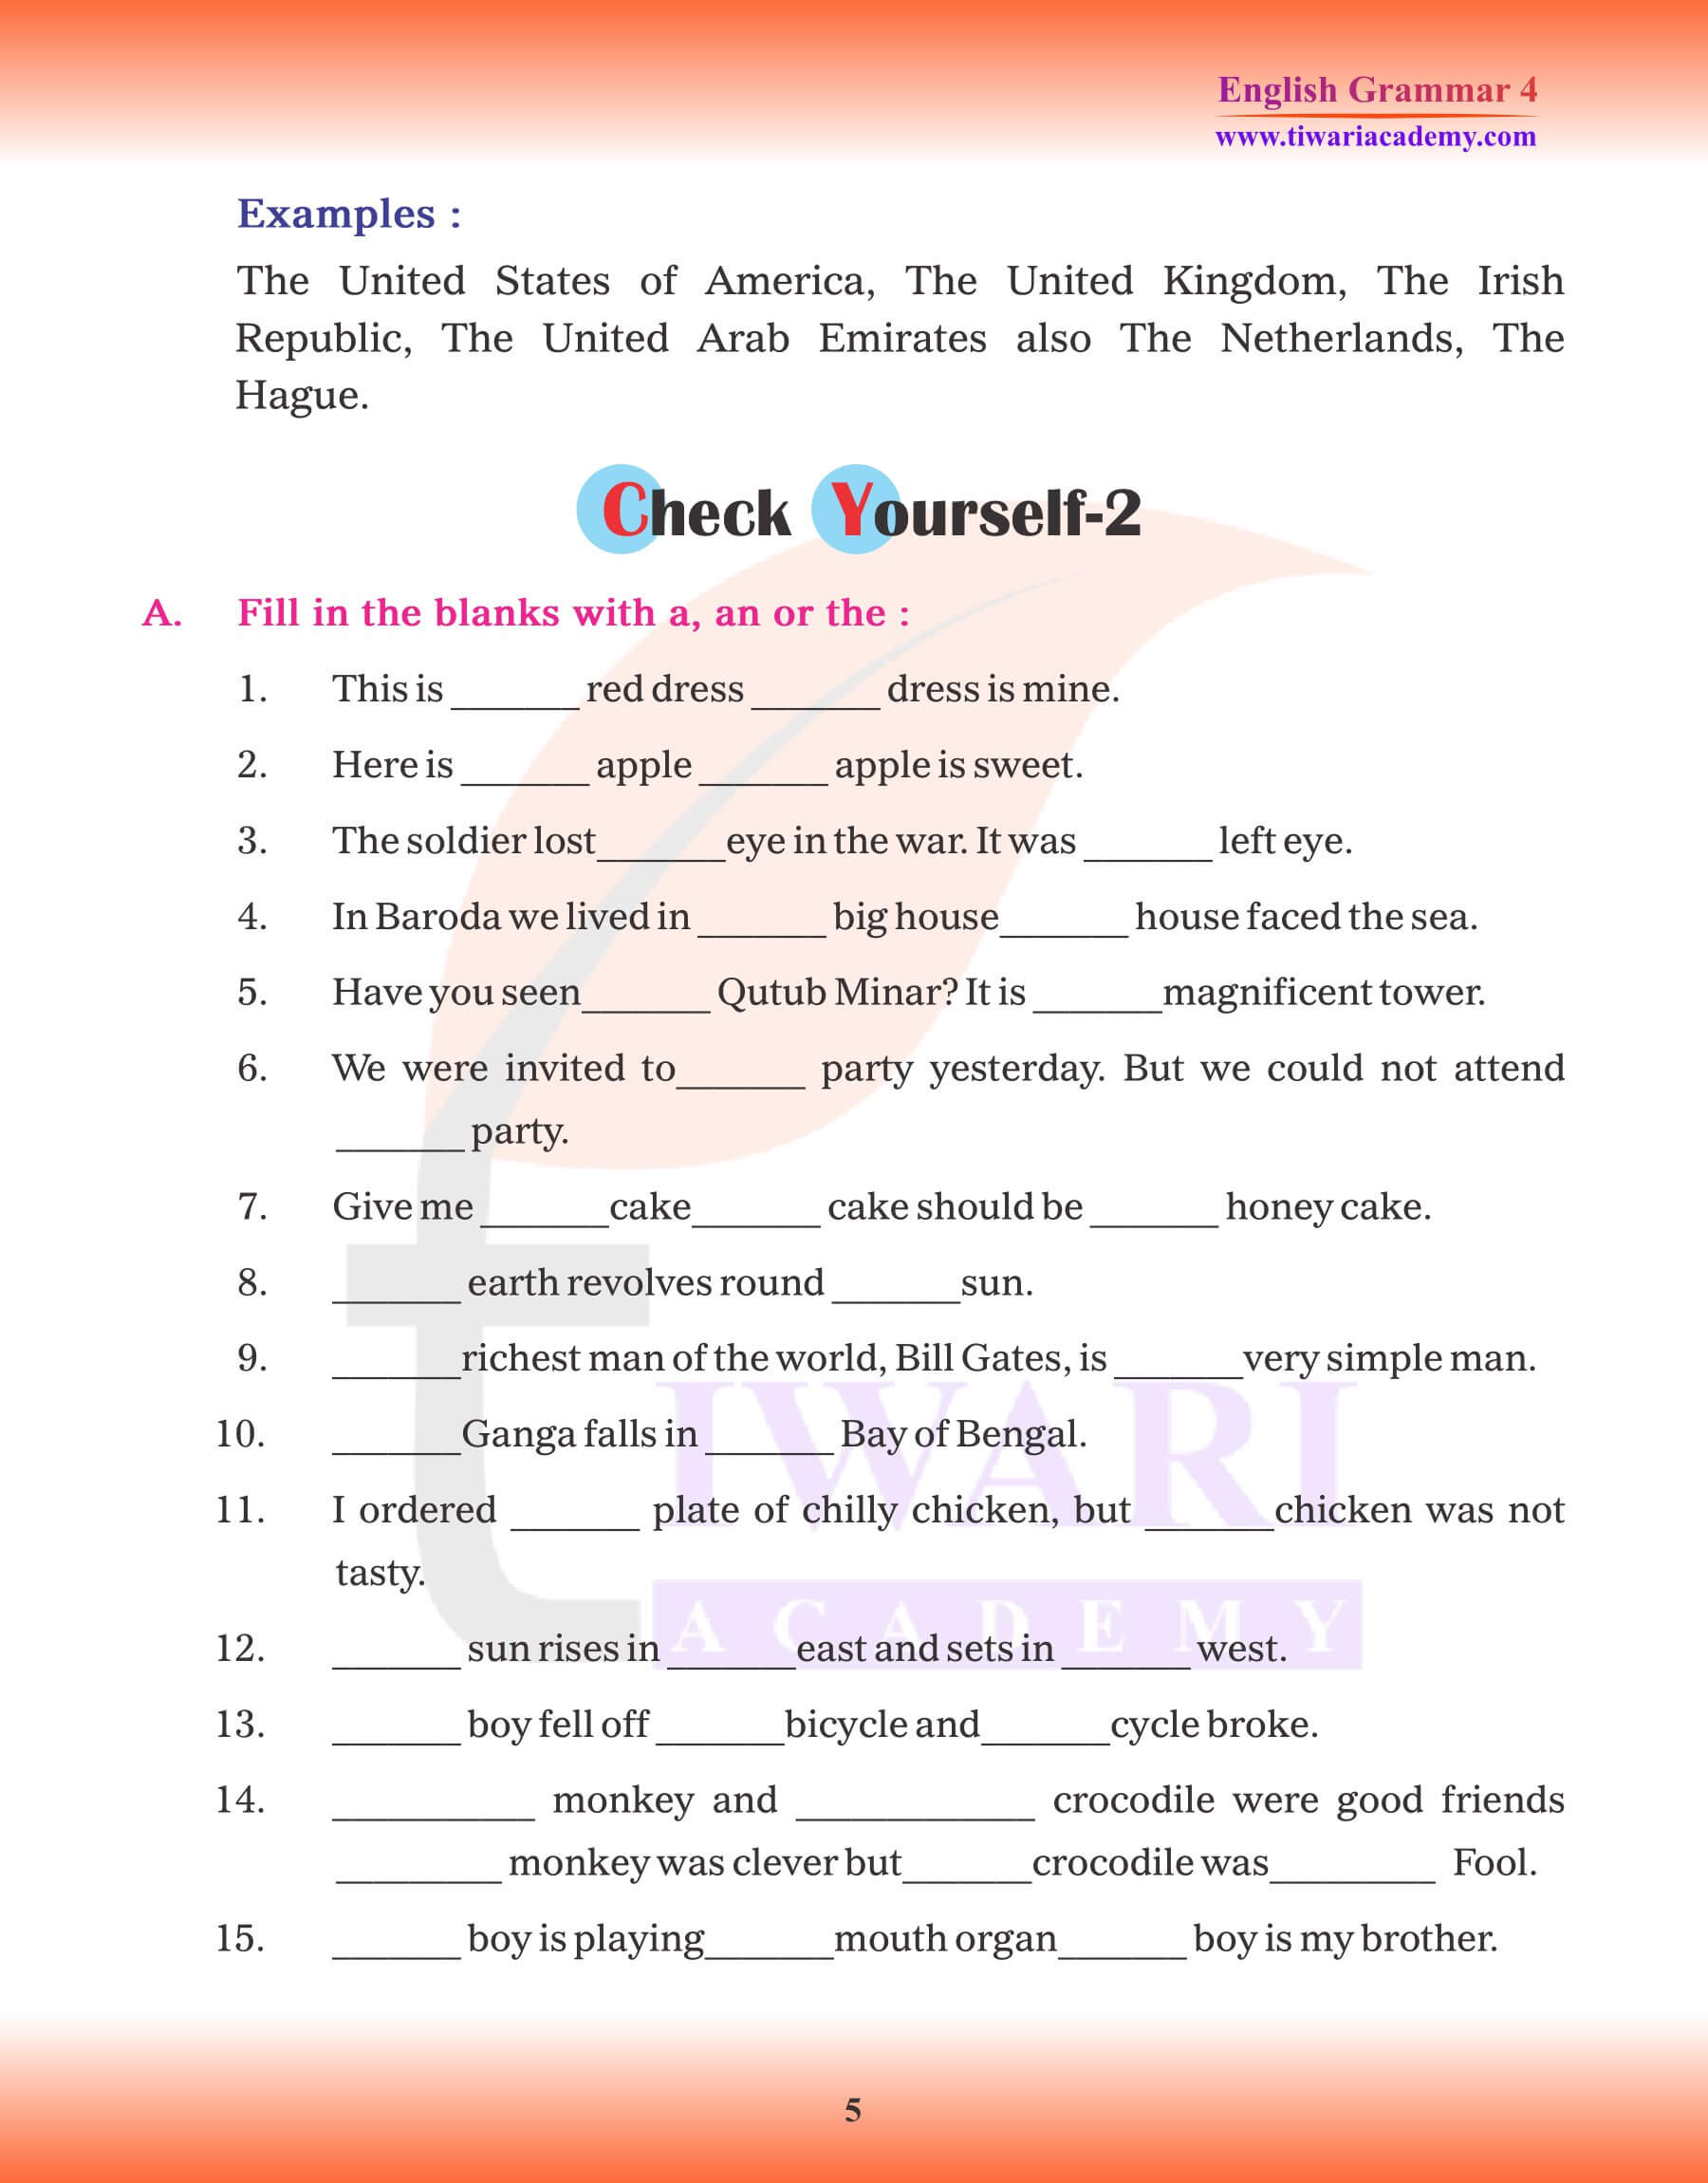 Class 4 English Grammar Articles Practice